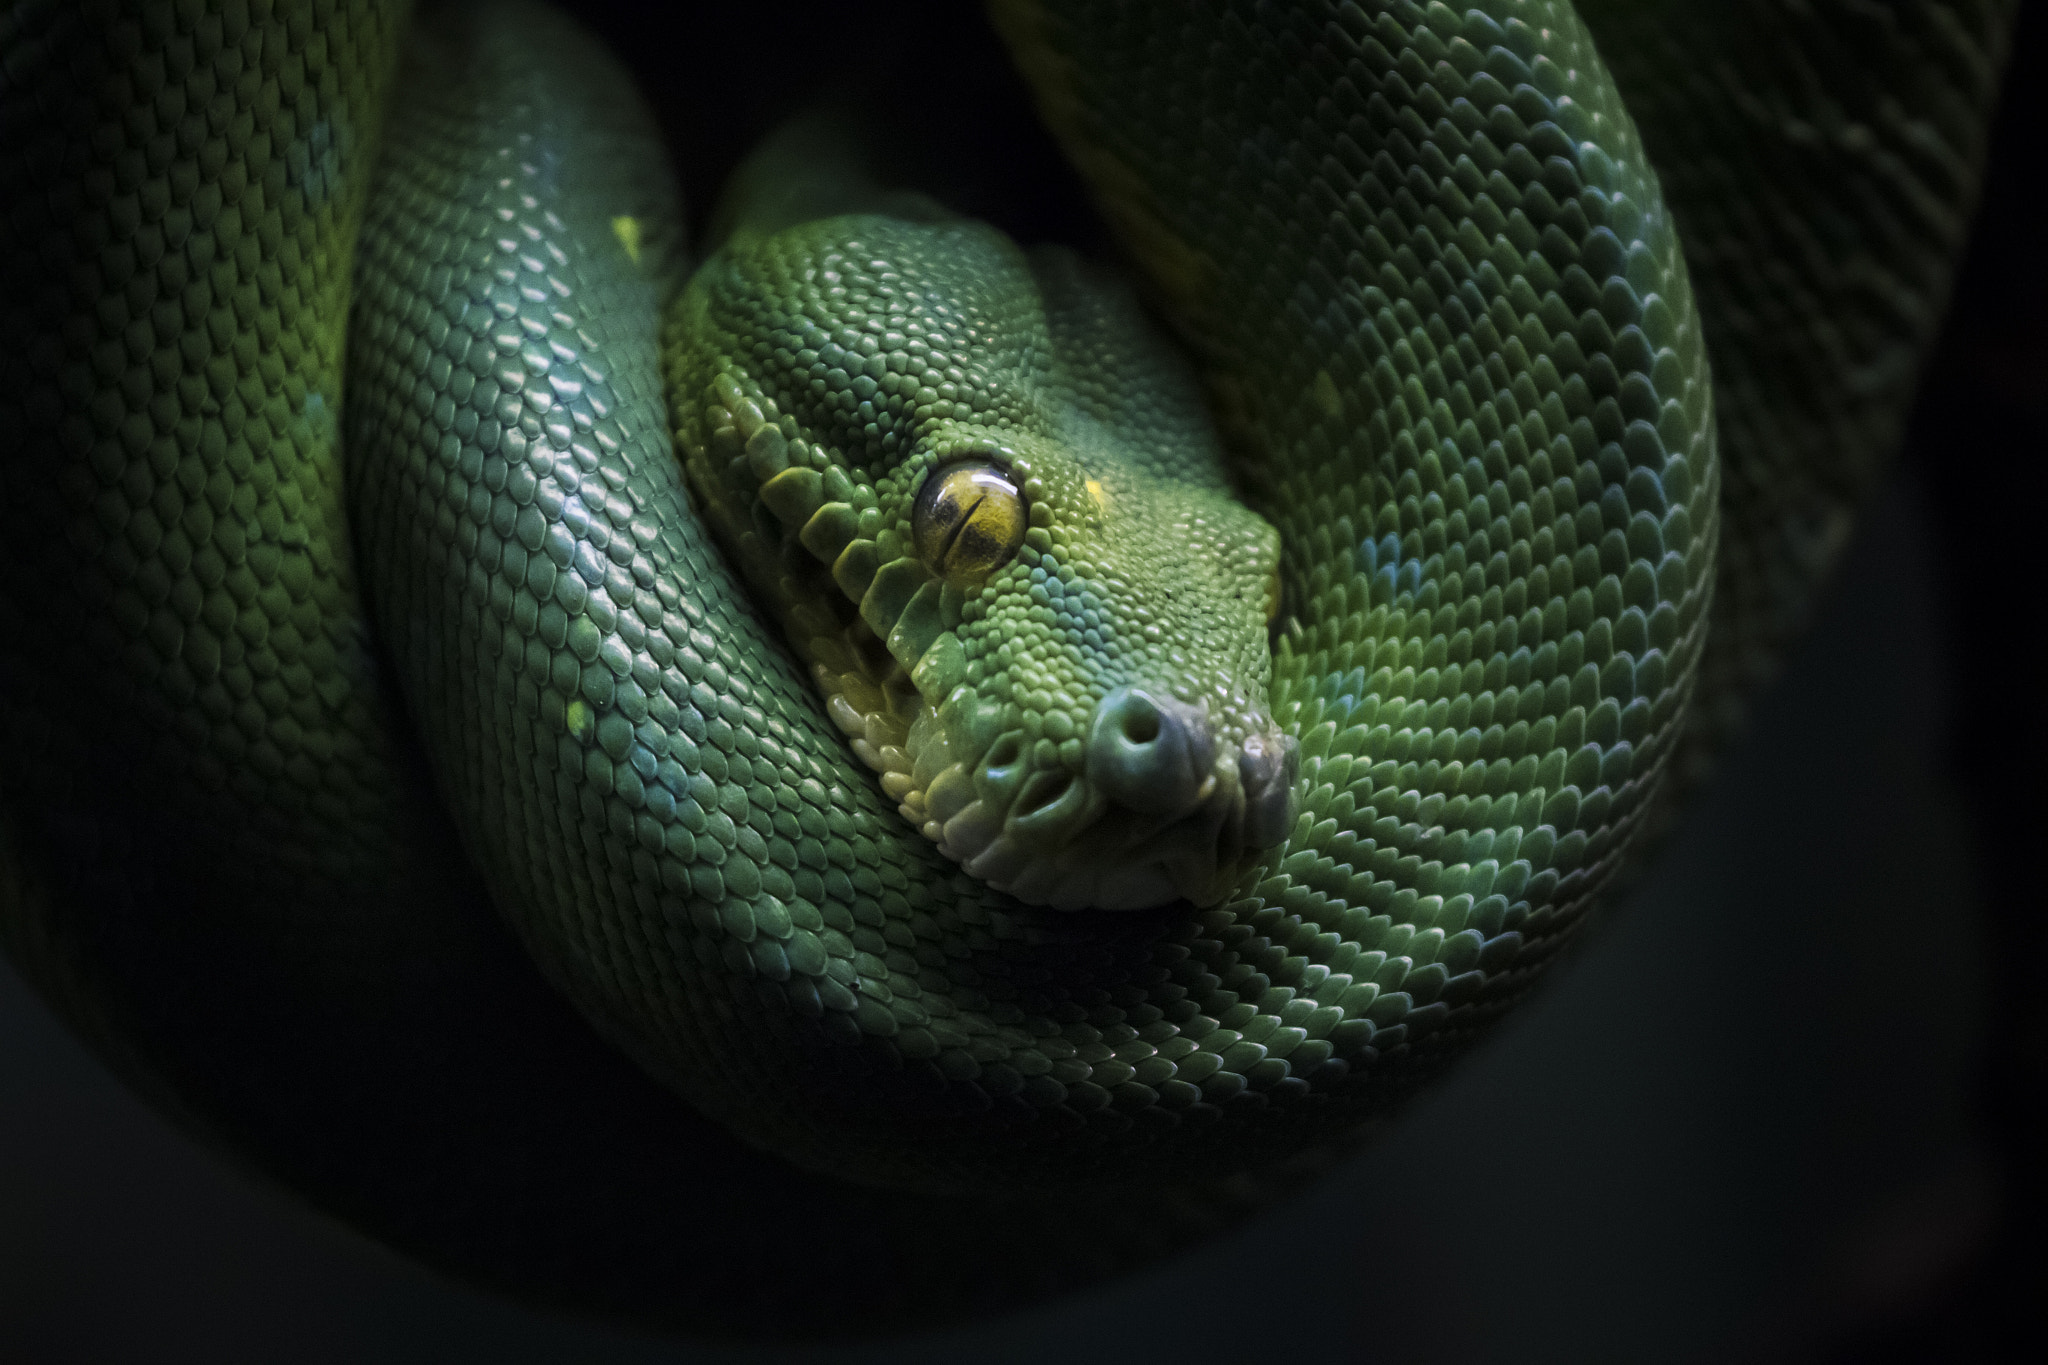 General 2048x1365 dark snake reptiles animals green